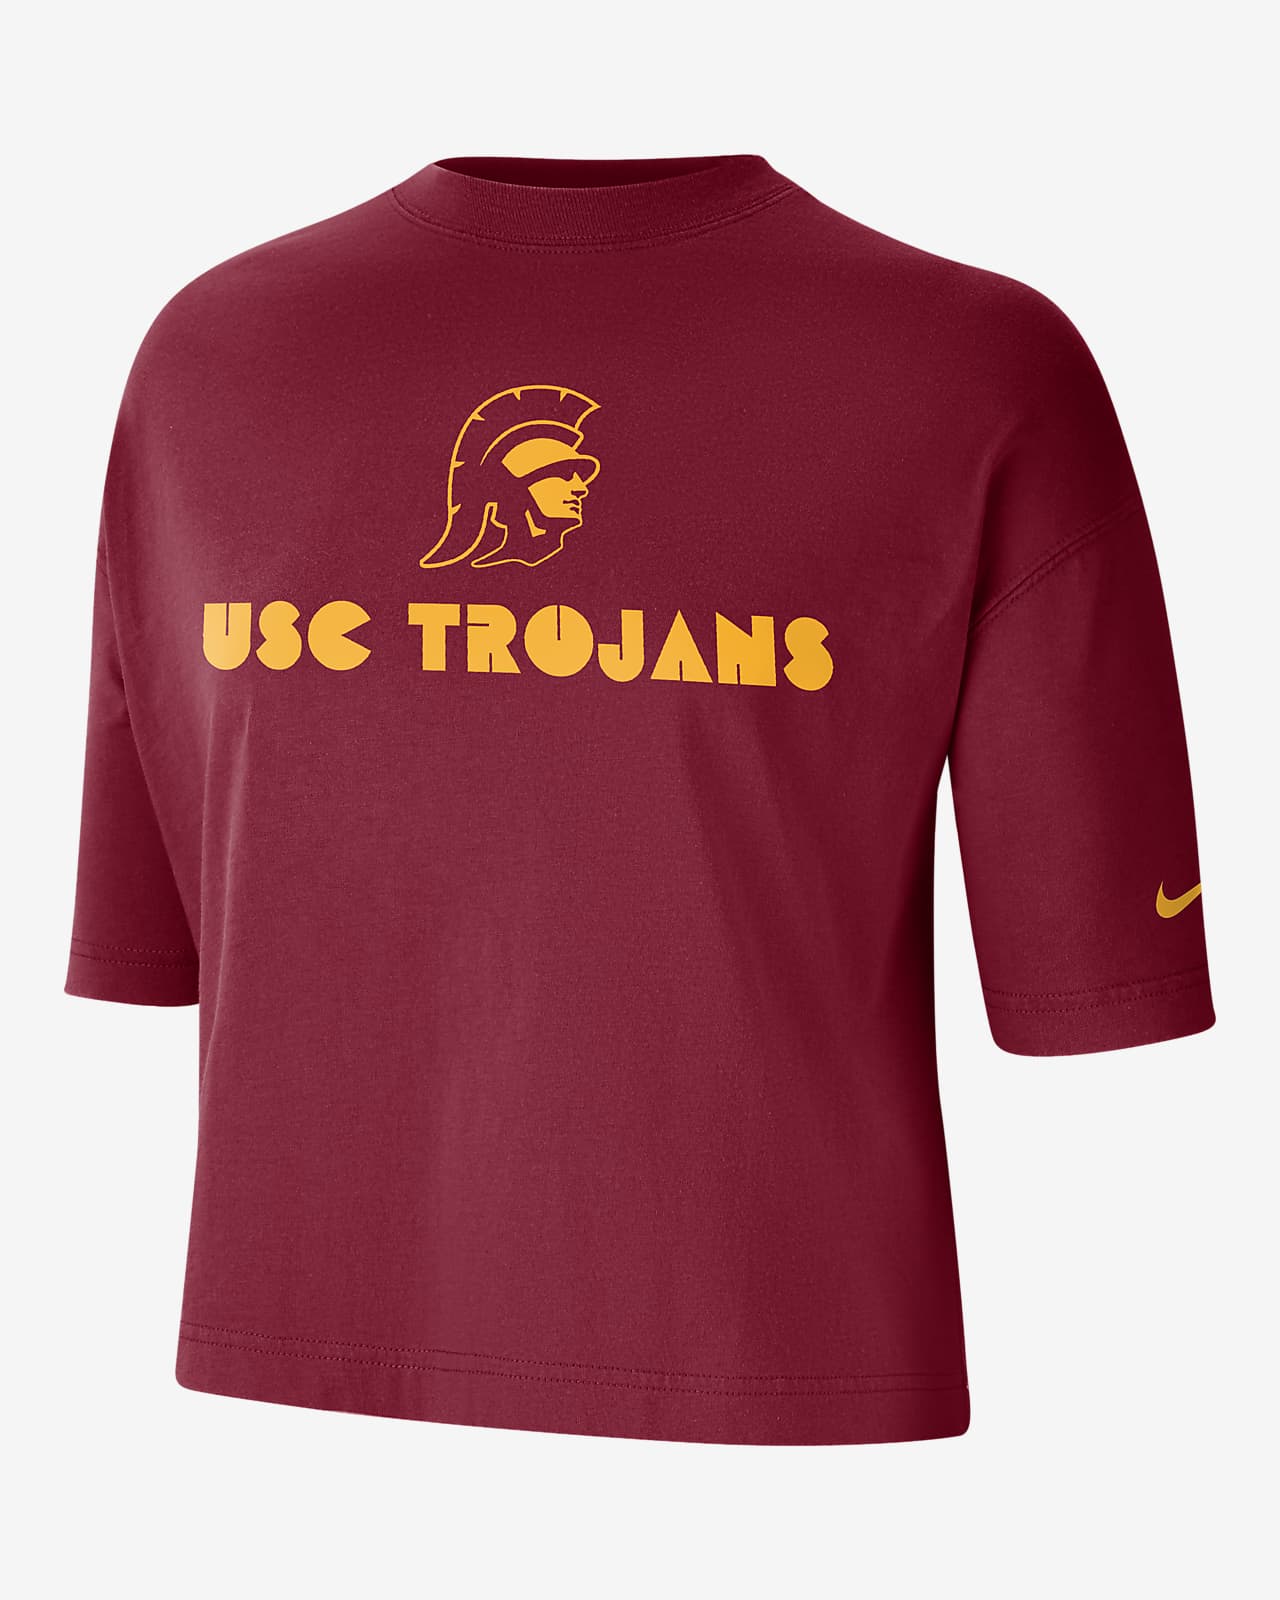 USC Trojans Shirt T-Shirt Hat Hoodie Football Jersey Sweatshirt Jacket Clothing 